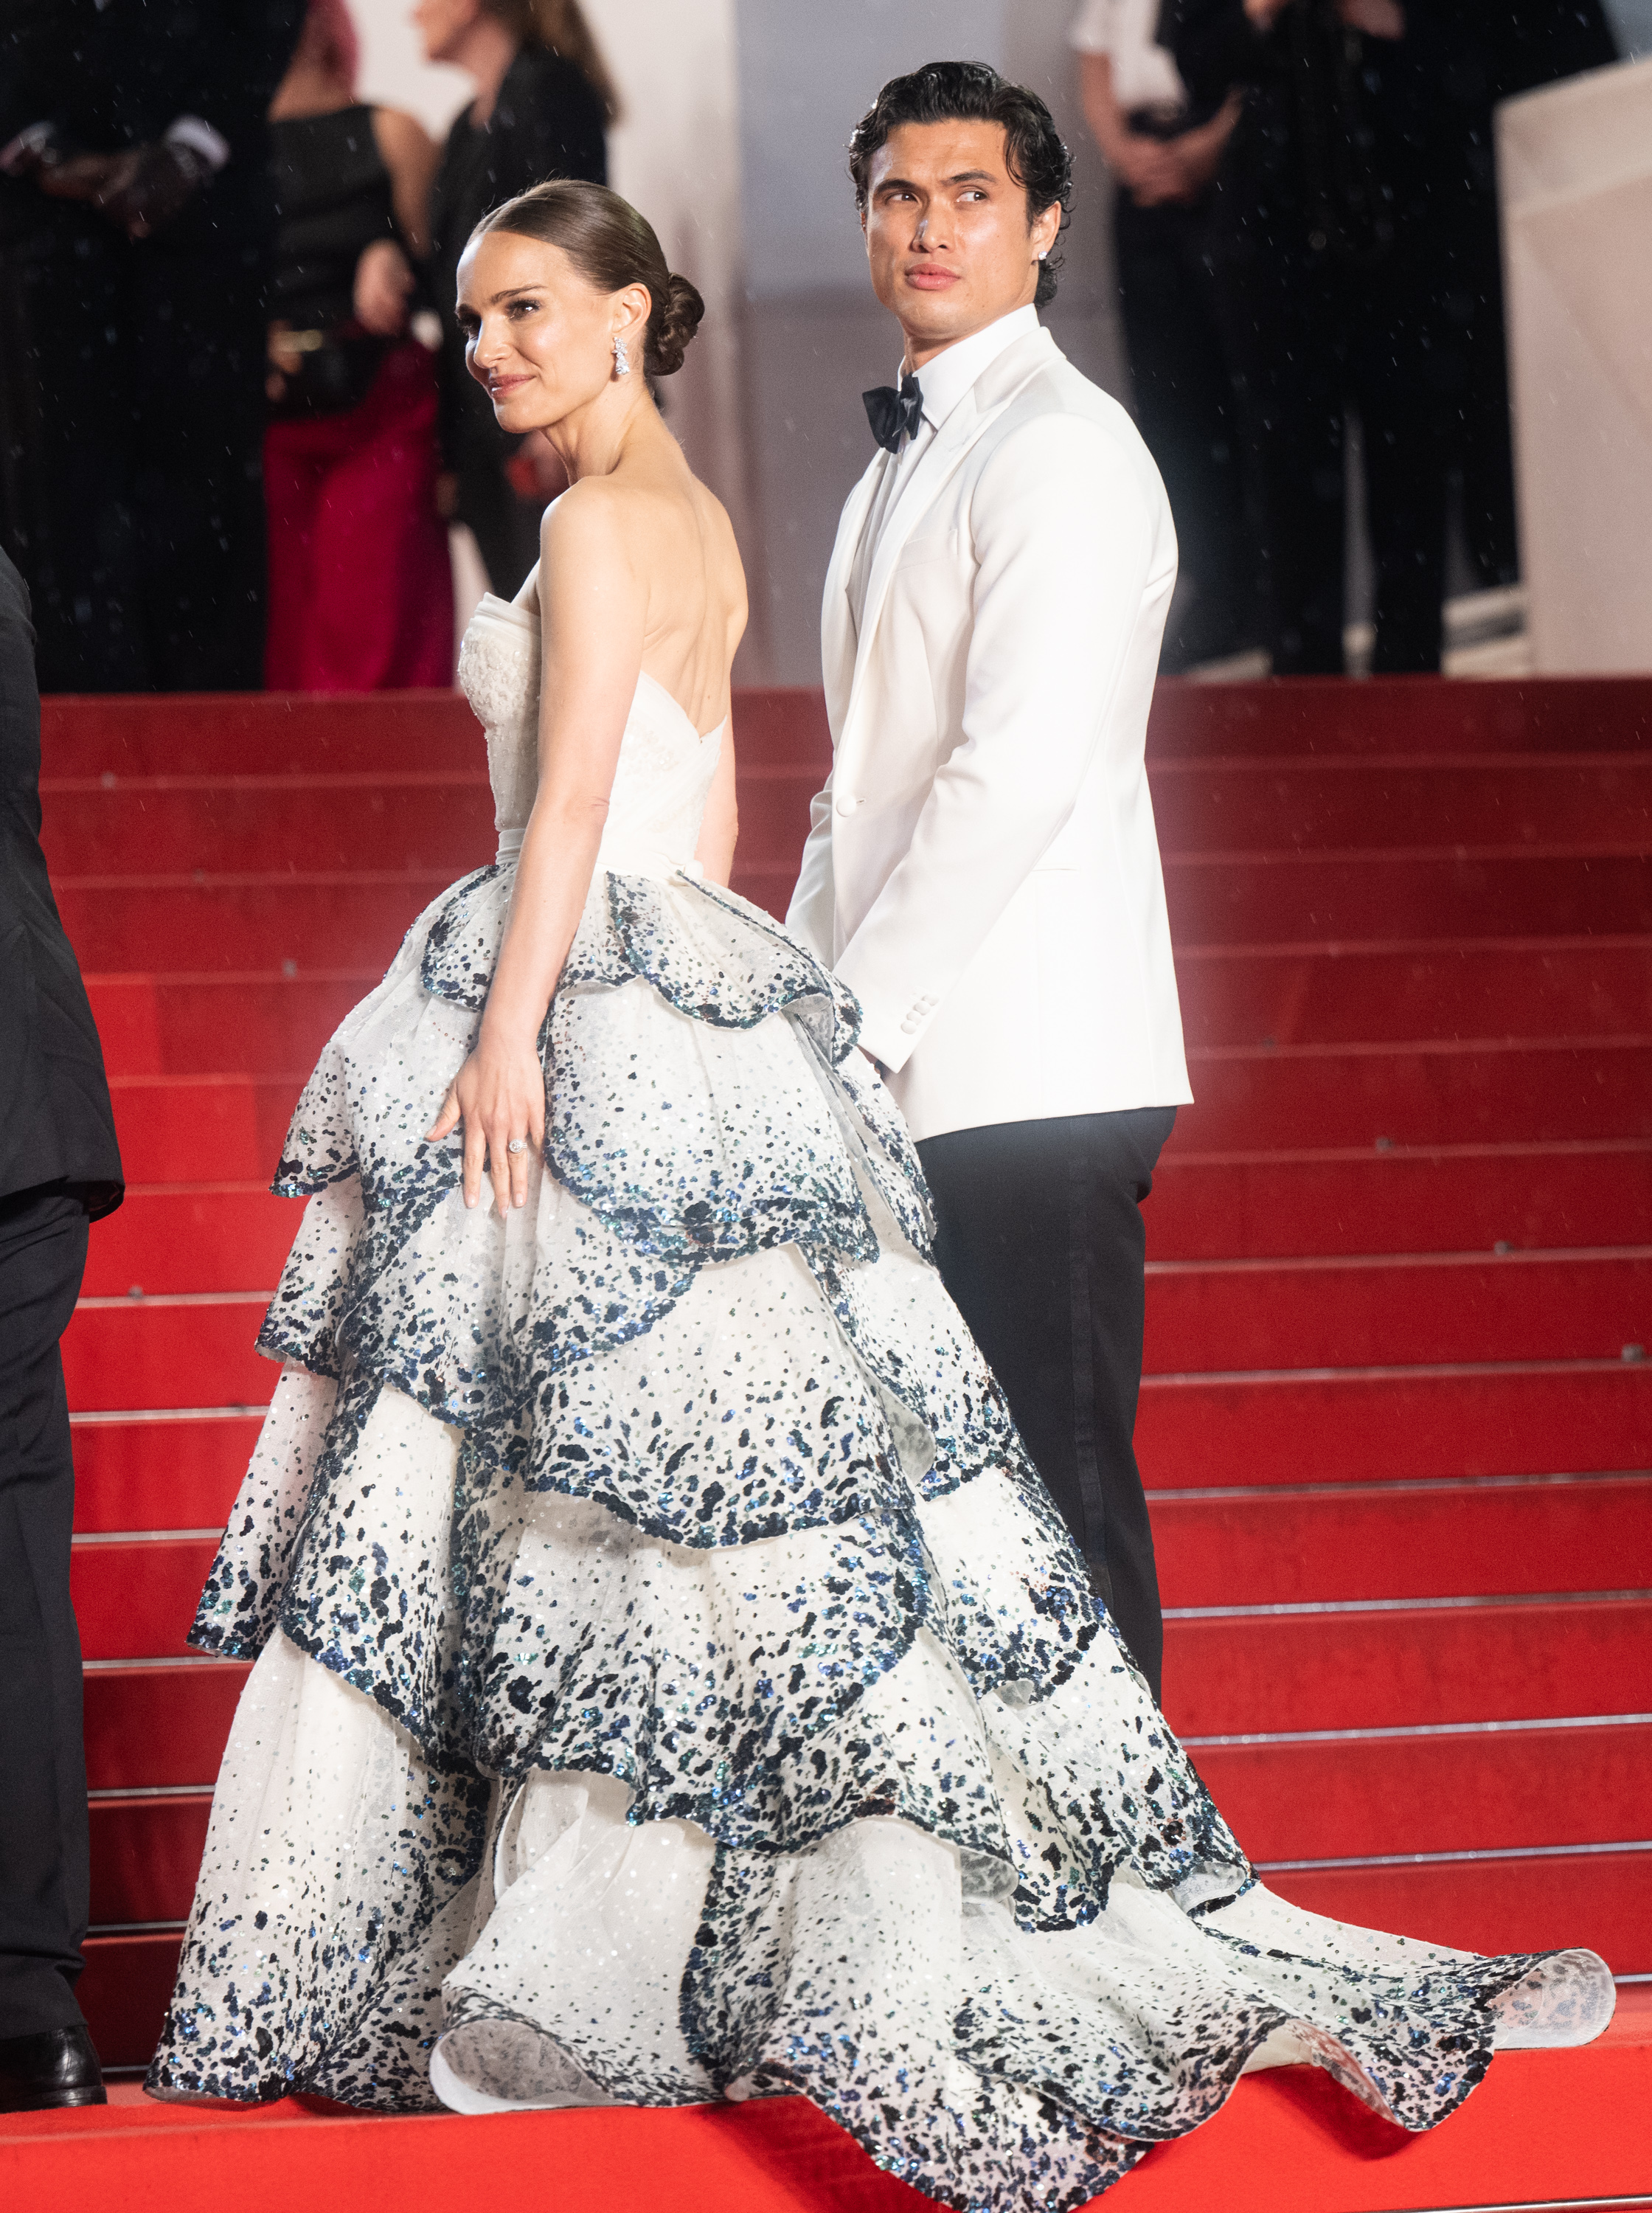 Natalie Portman Sparkles in Dior Dress at Cannes Film Festival 2023   Footwear News